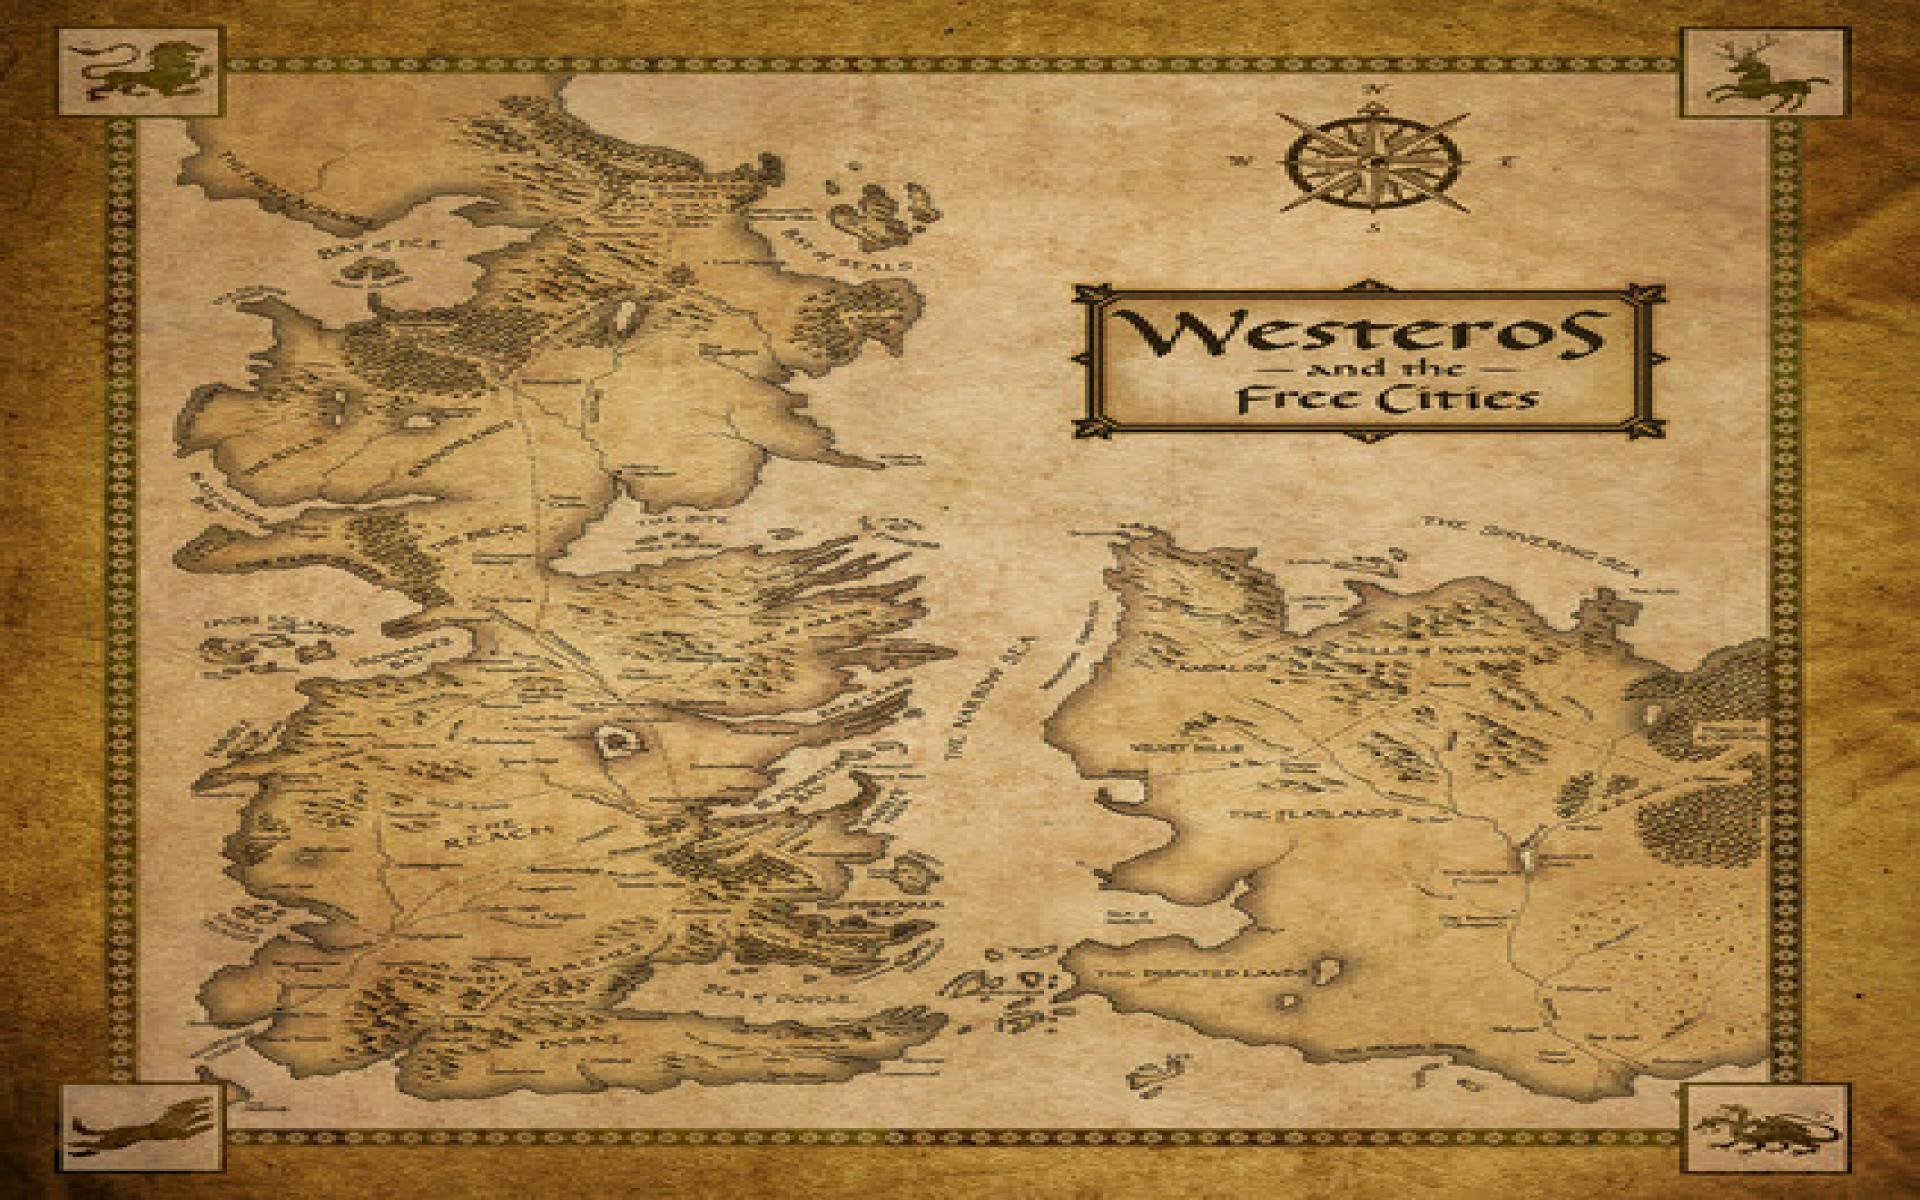 Game Of Thrones Map Wallpaper 423x500 px, J4ZT6